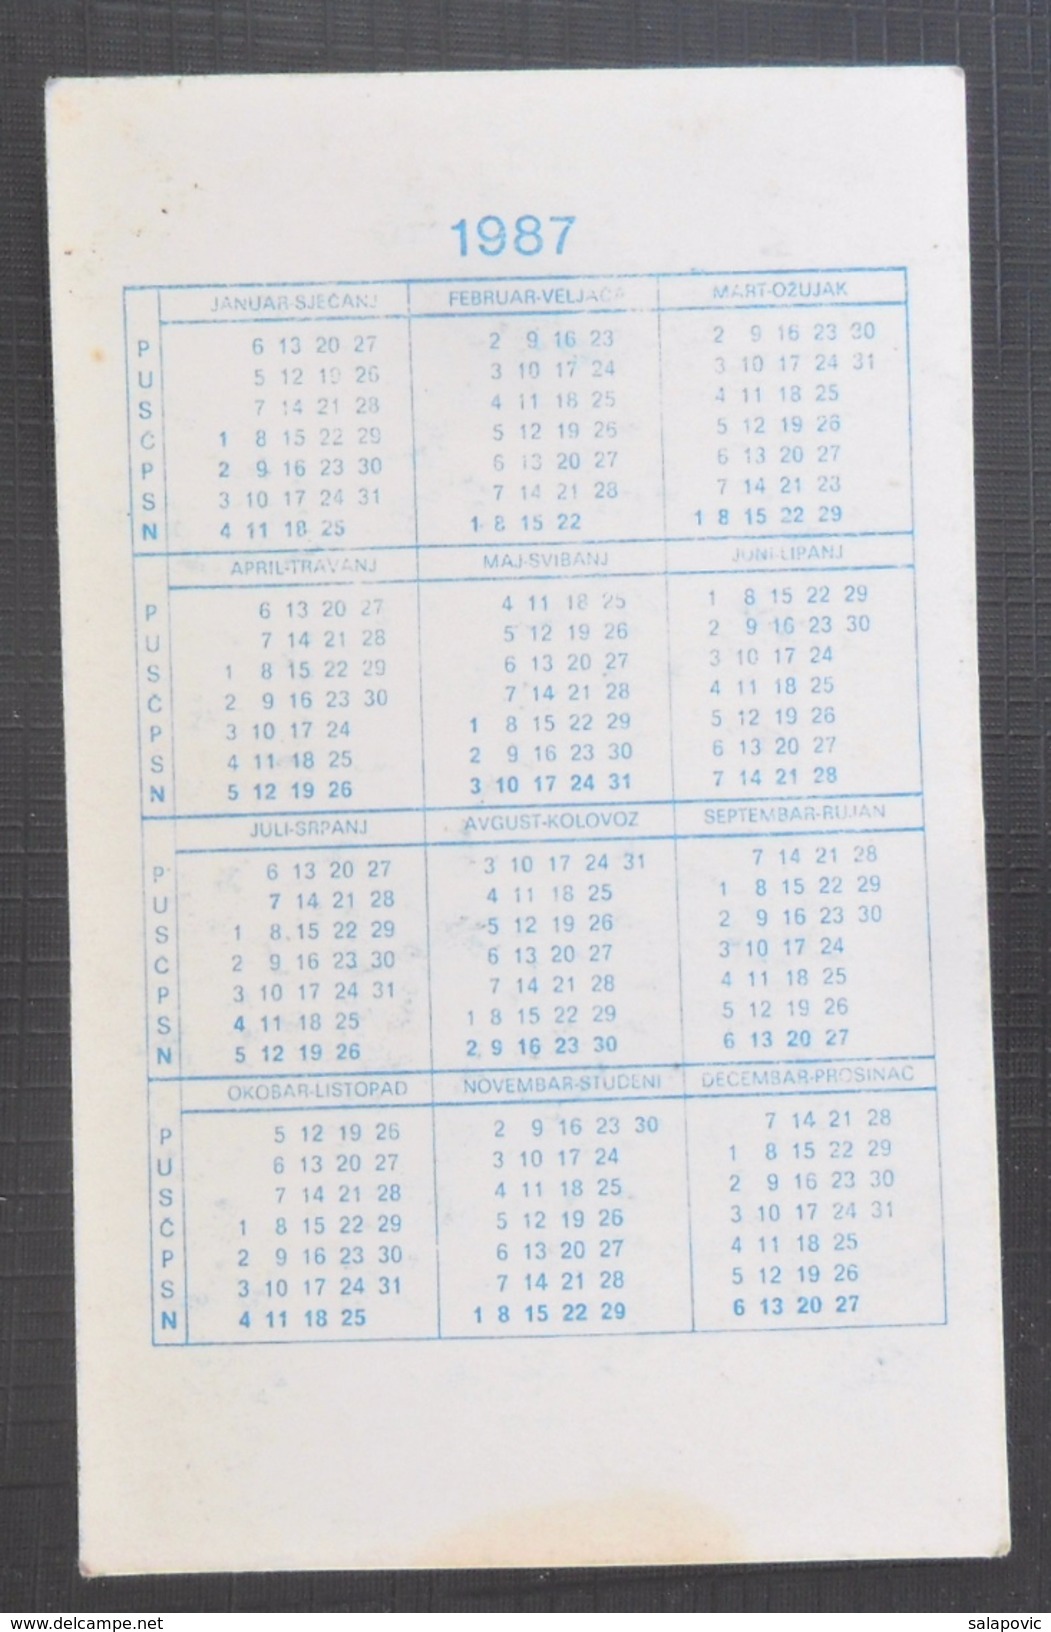 SD DARDA, CROATIA  FOOTBALL CLUB, SOCCER / FUTBOL / CALCIO, Calendar Kalender Calendrier Kalendar 1987 - Apparel, Souvenirs & Other